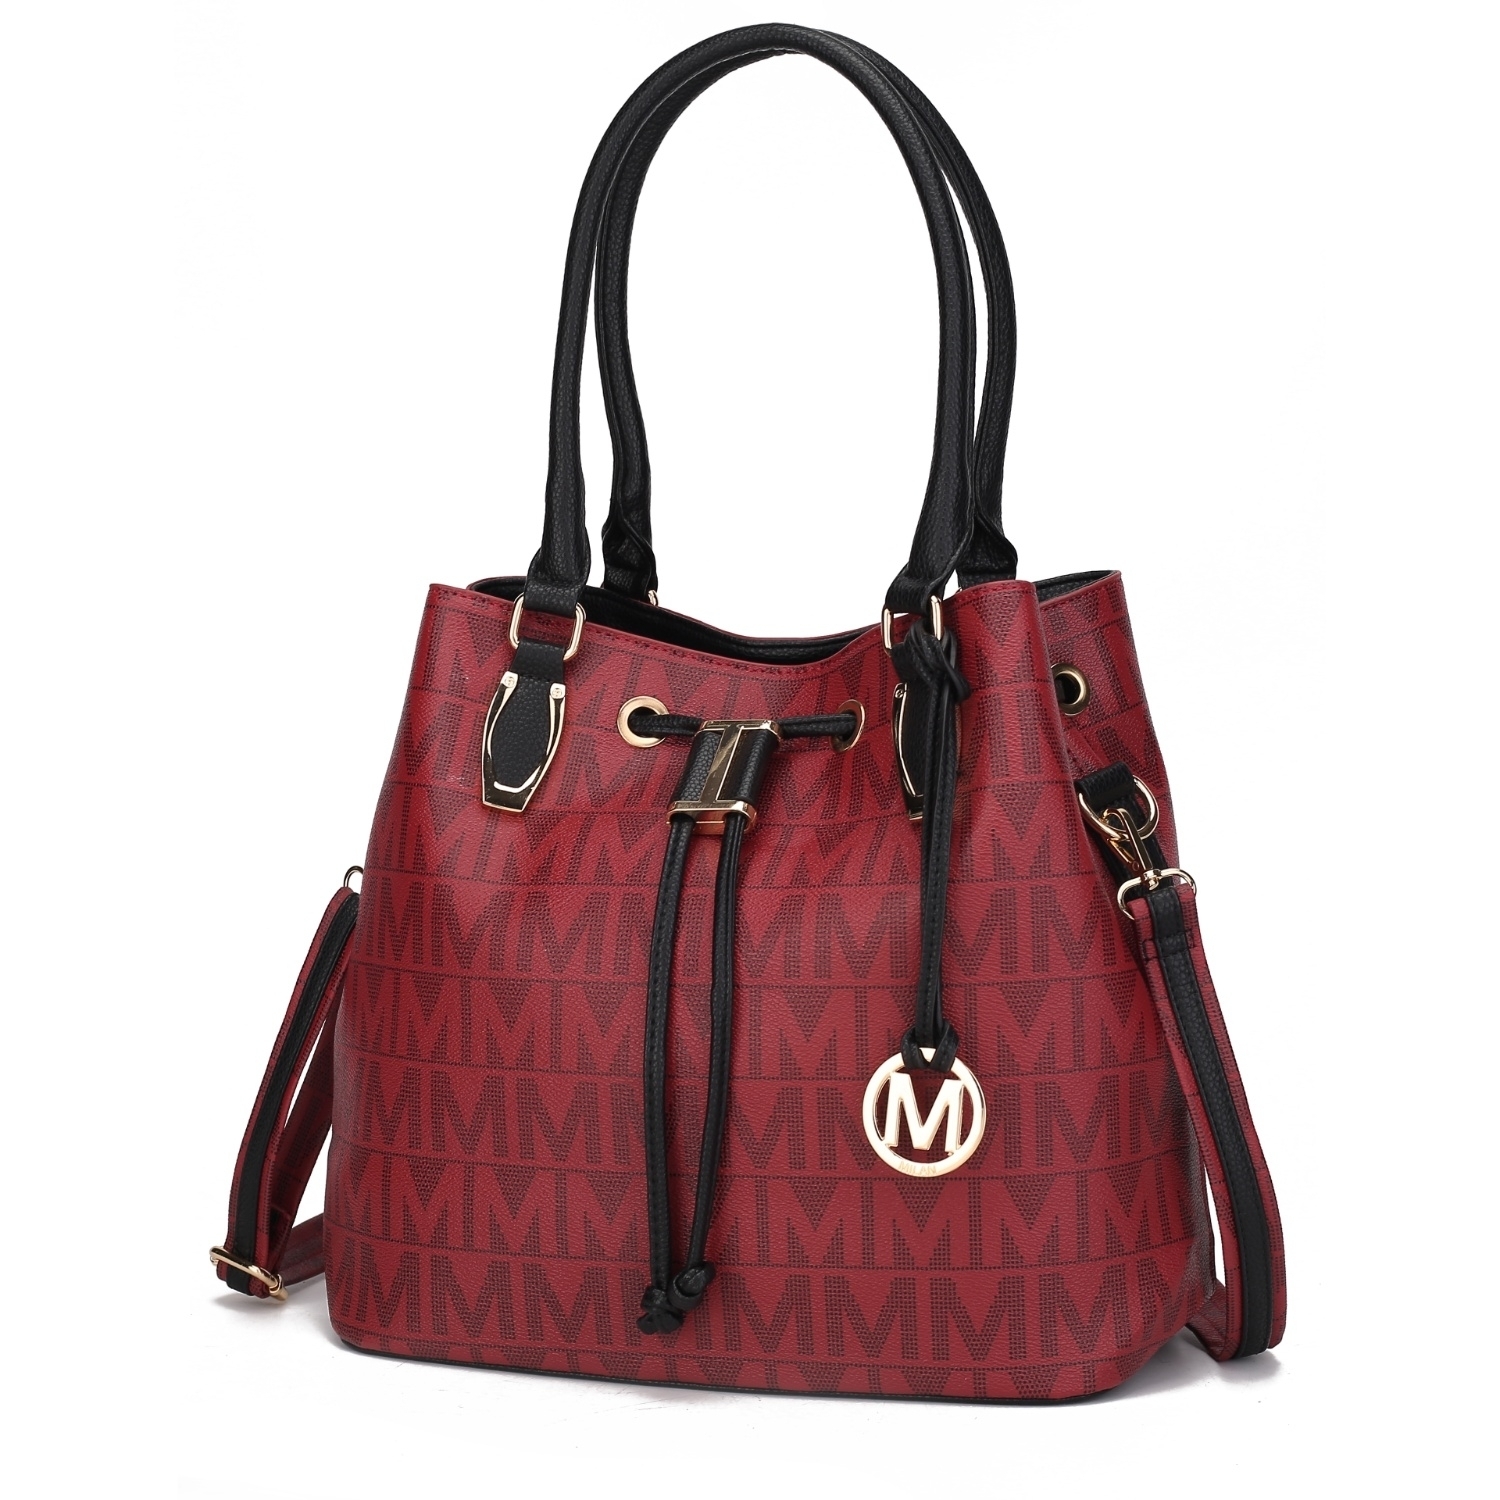 MKF Collection Jane Vegan Leather Tote Handbag By Mia K. - Burgundy